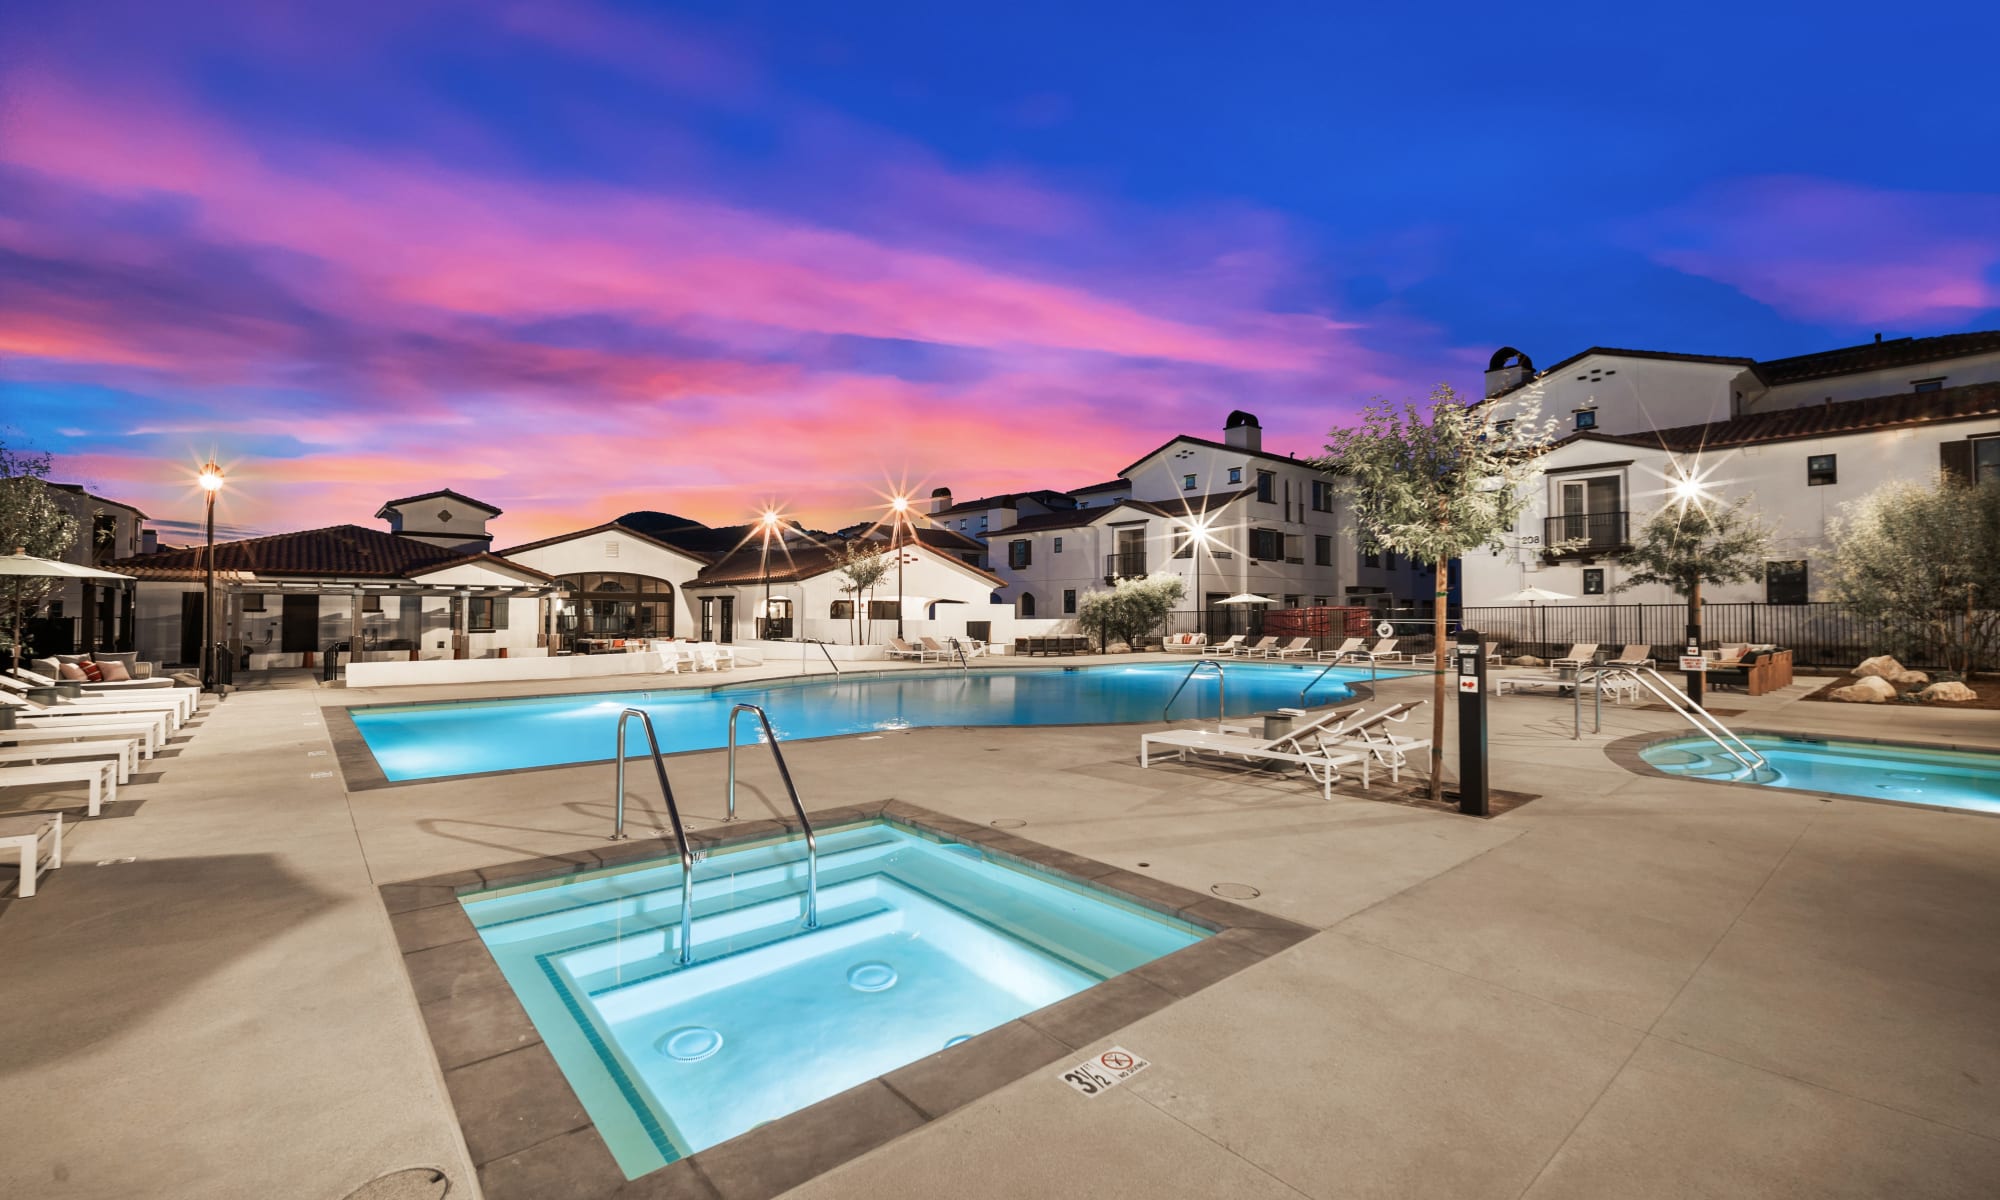 Beautiful sunset over the spa and pool at The Villas at Anacapa Canyon in Camarillo, California